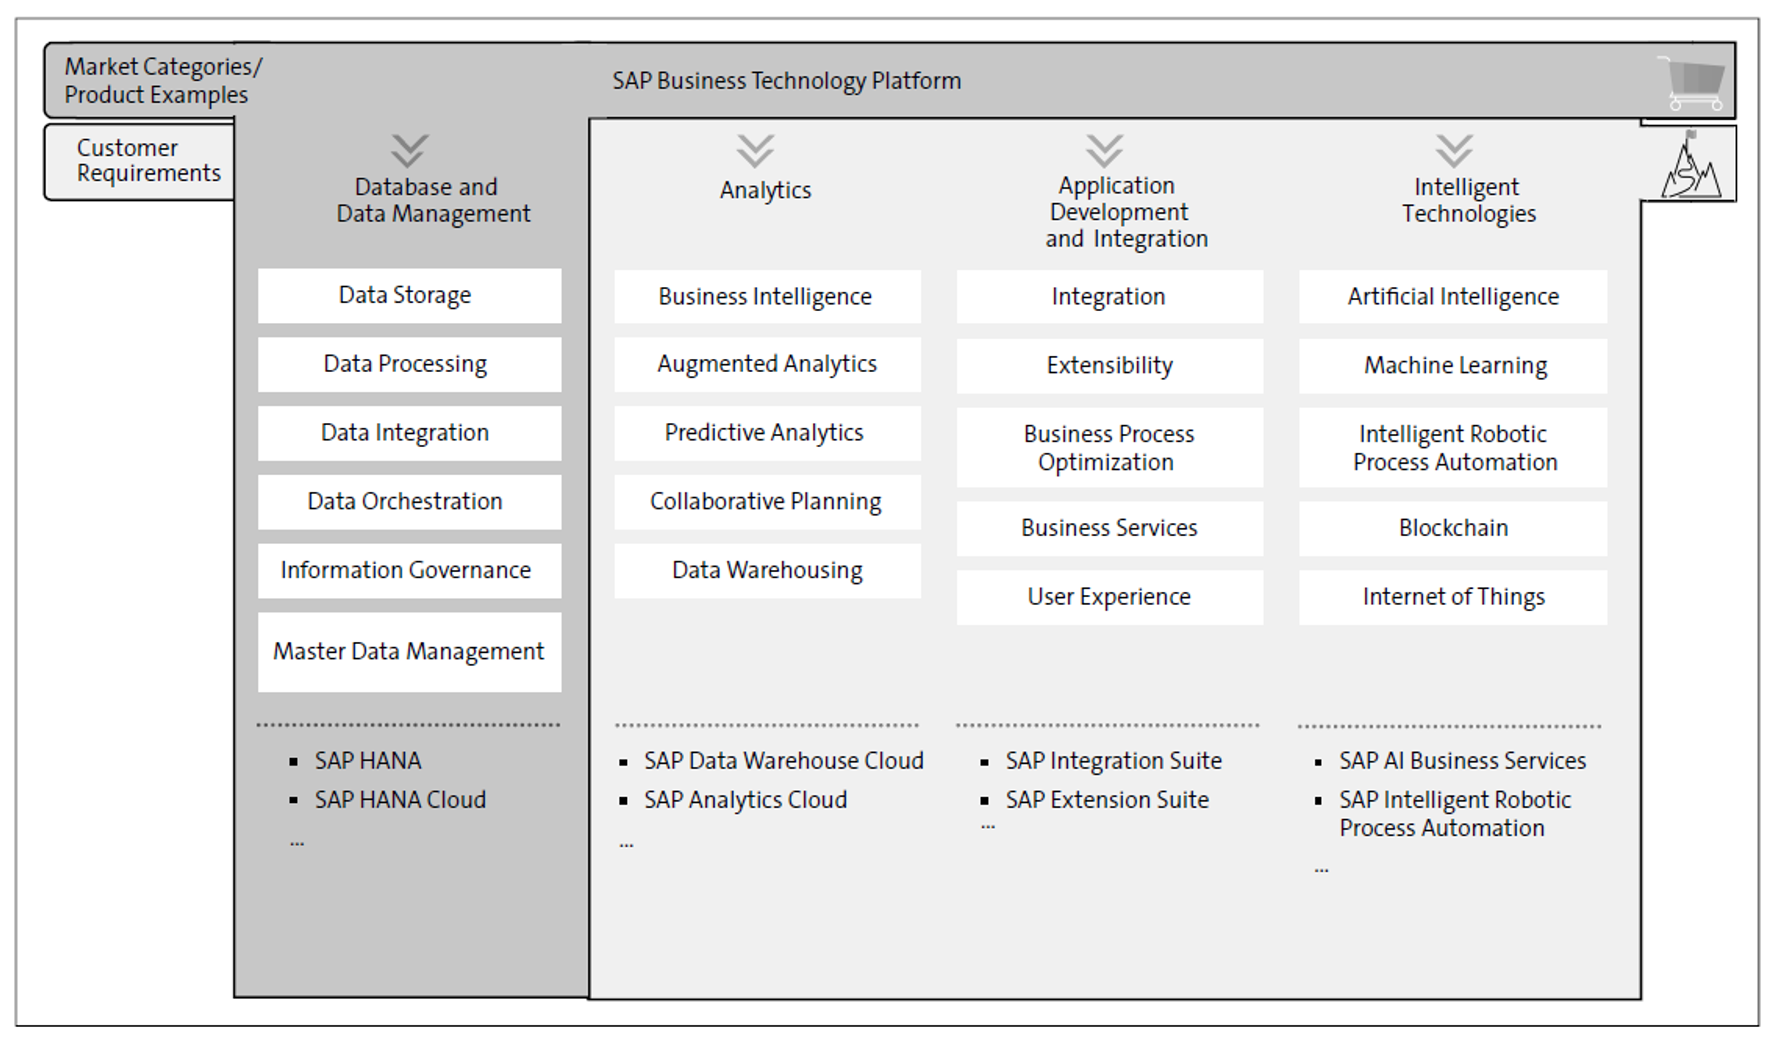 SAP BTP: Database and Data Management Pillar